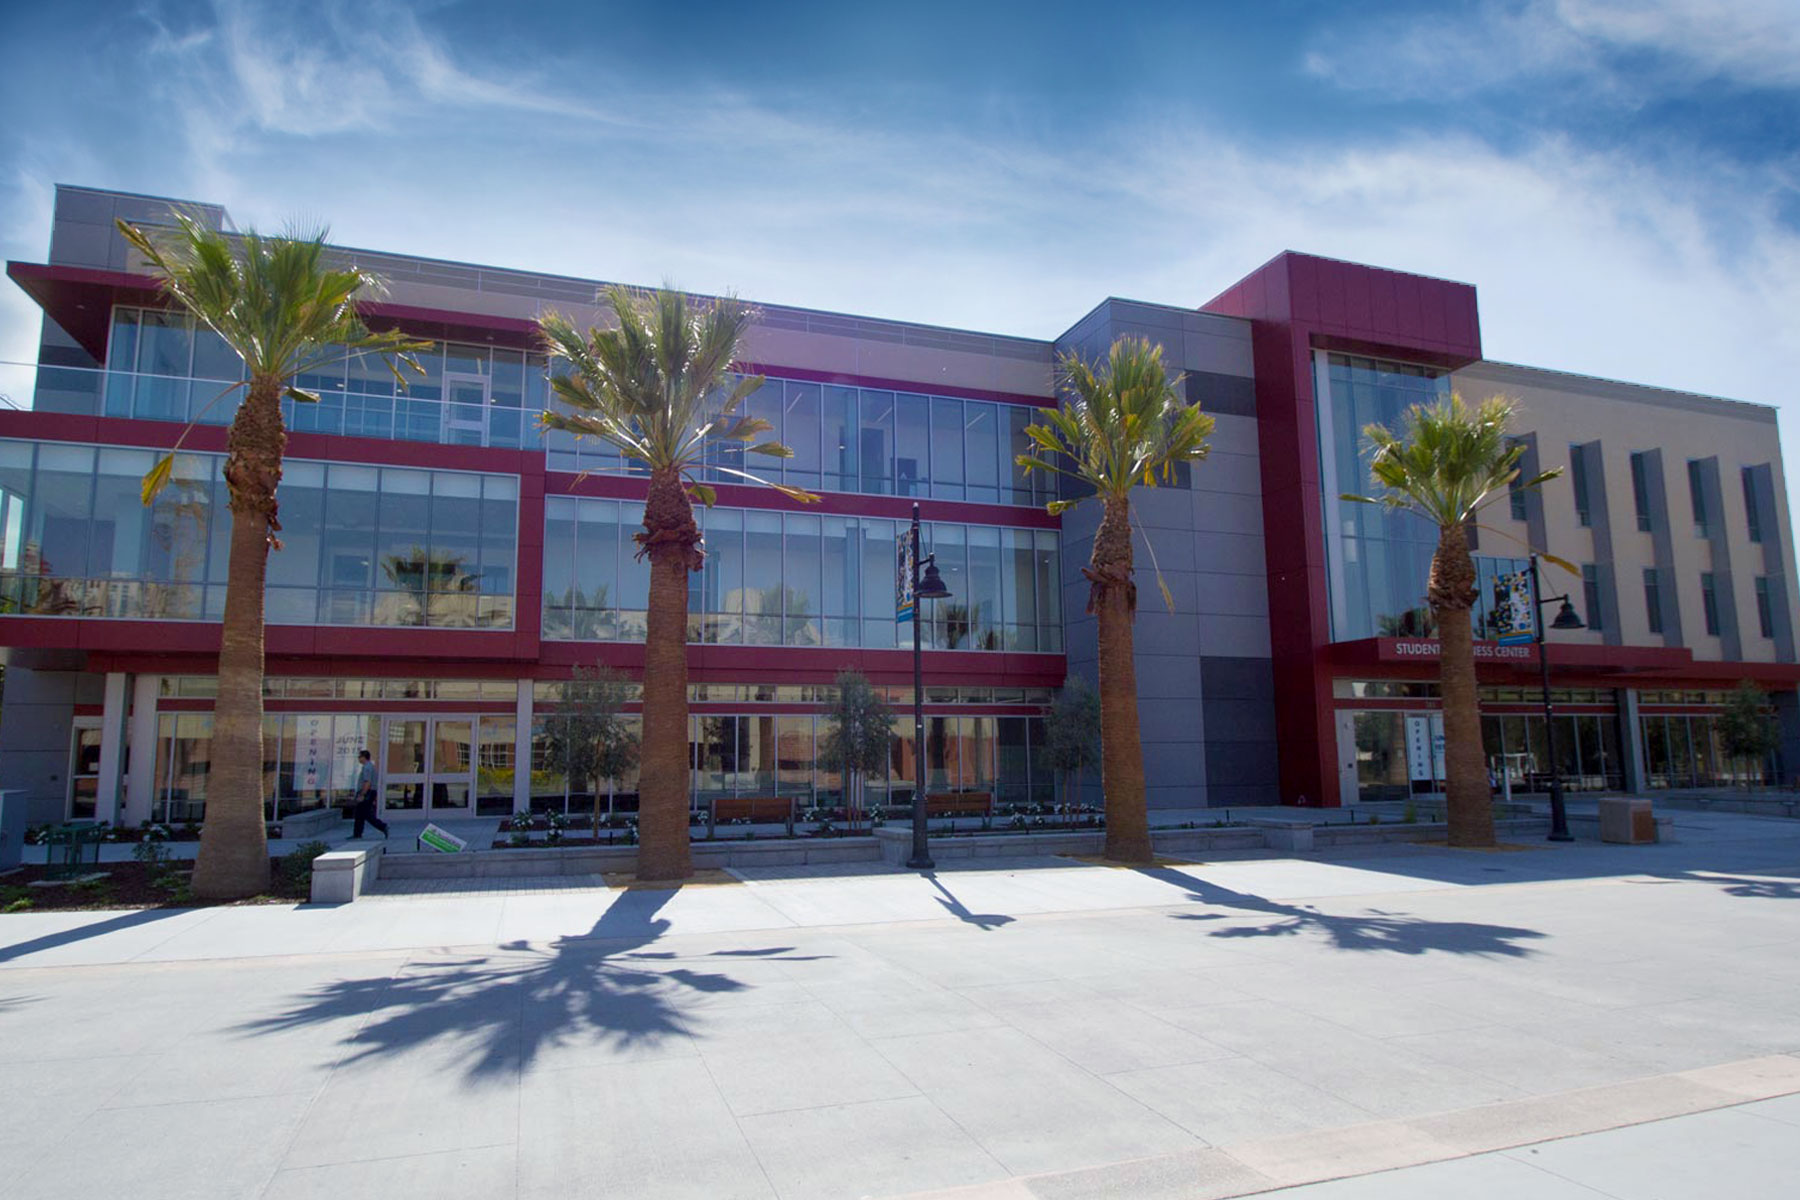 San Jose State's Student Wellness Center